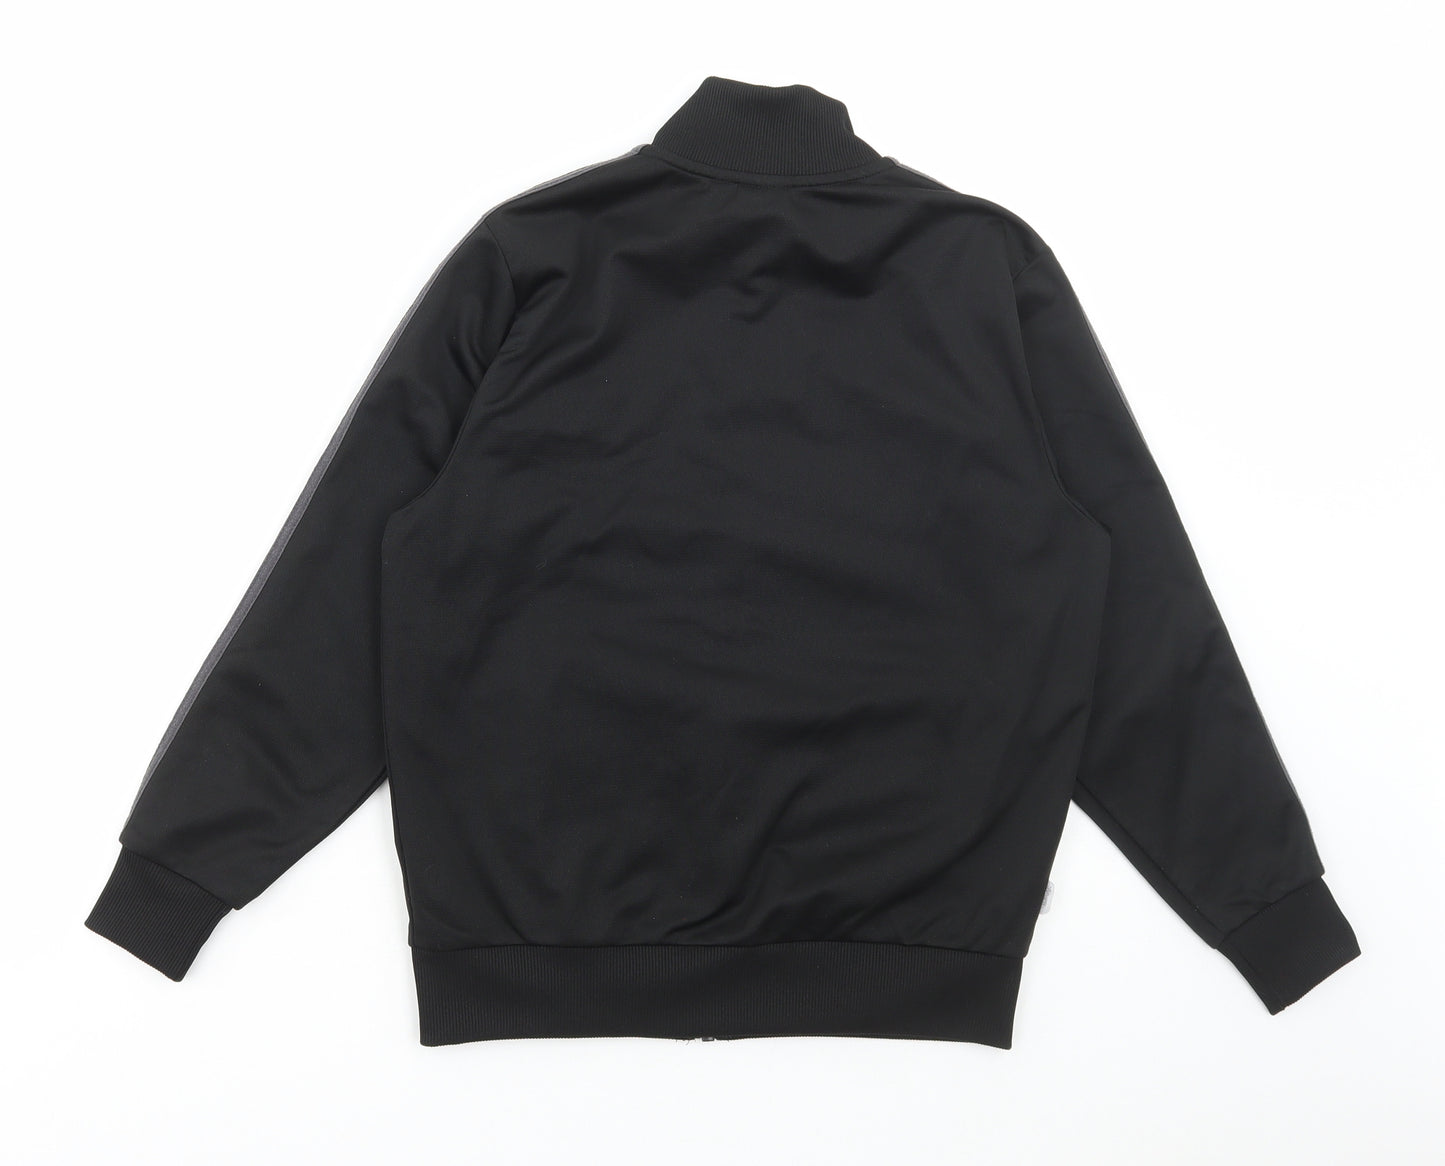 Lonsdale Boys Black Polyester Full Zip Sweatshirt Size 11-12 Years Zip